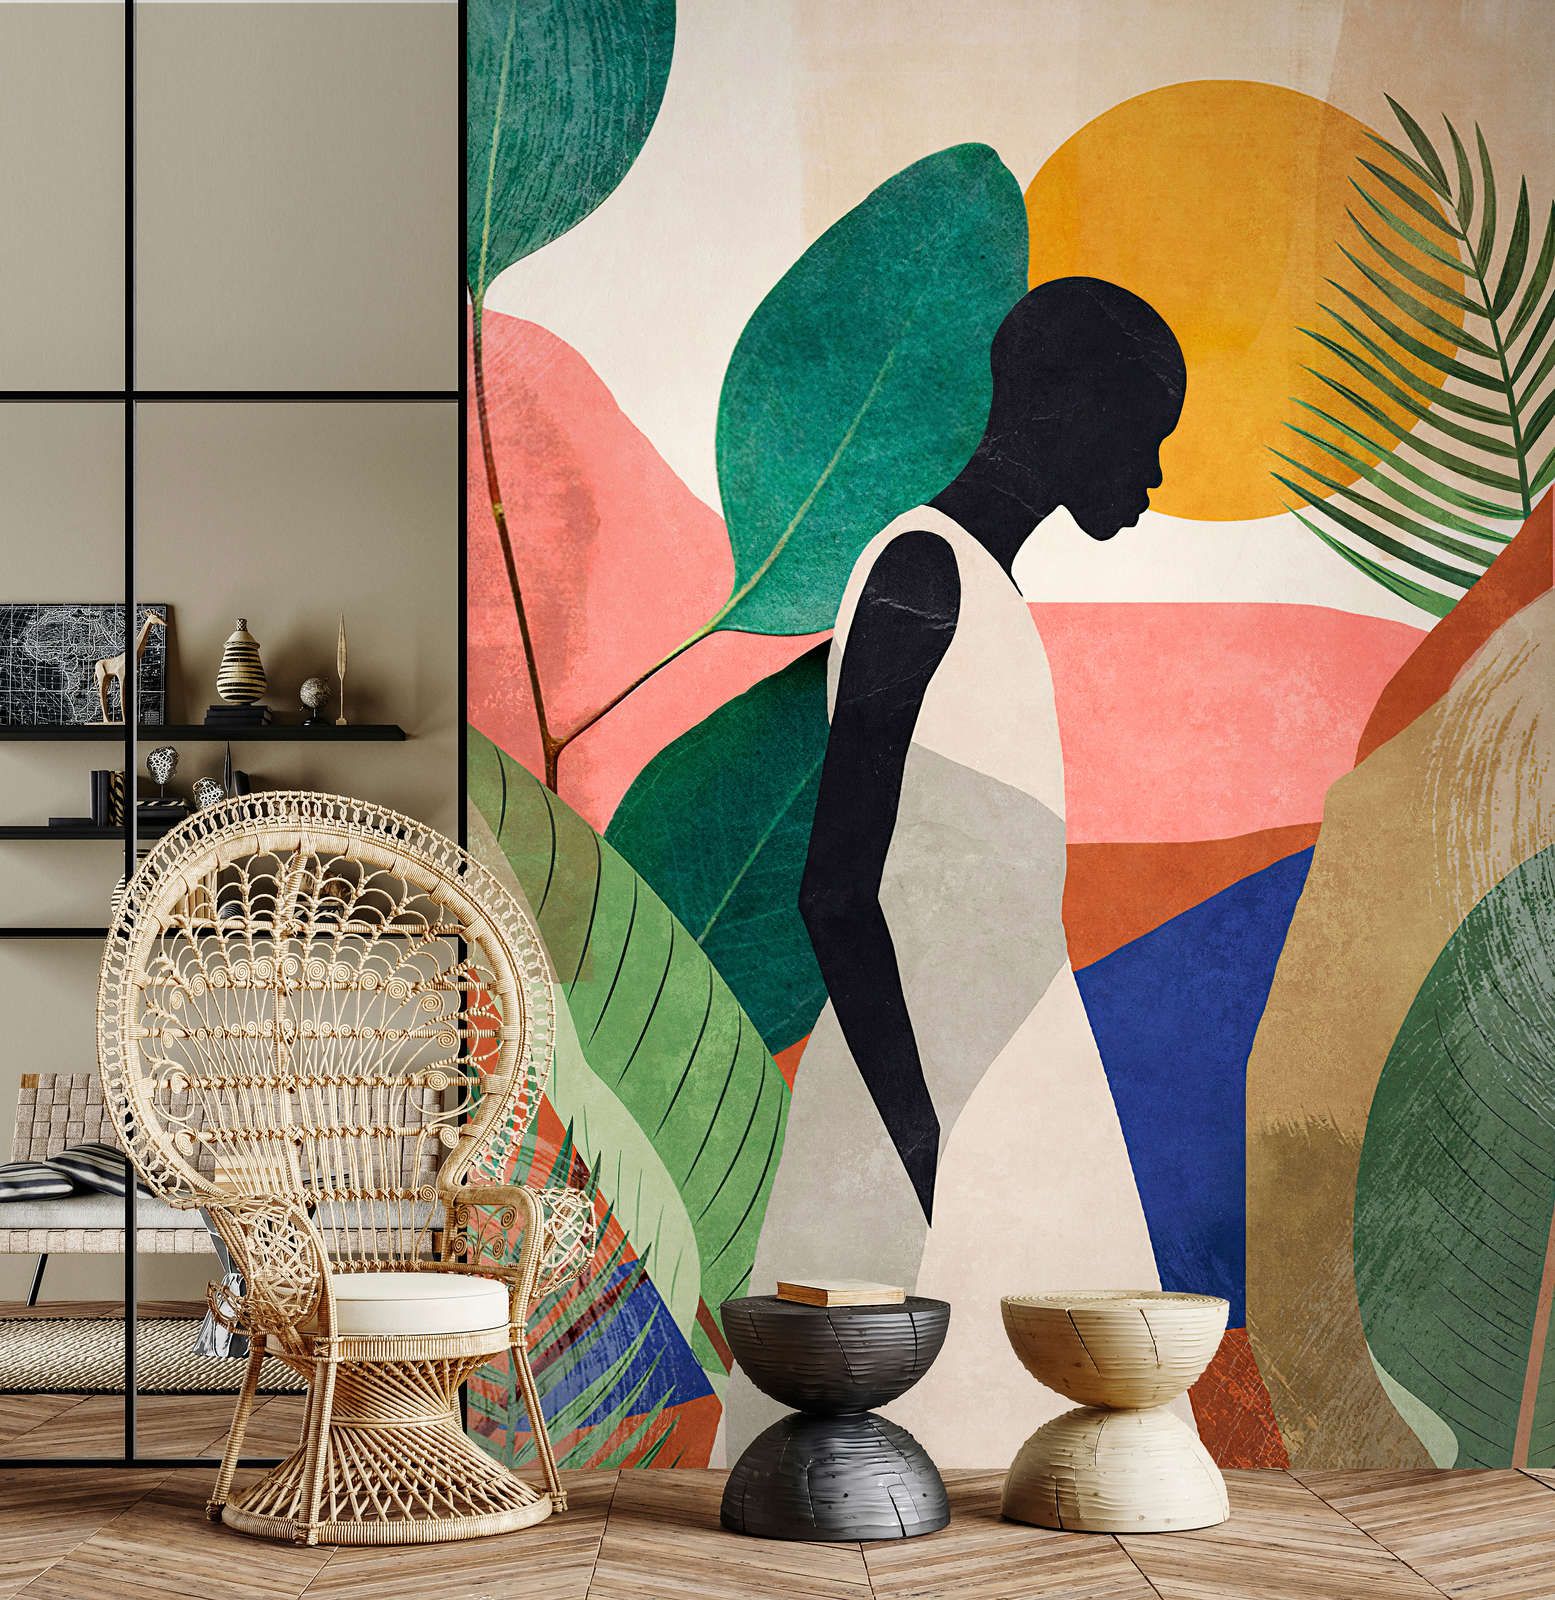             Photo wallpaper »nala« - Silhouette, leaves & grasses - Colourful motif on vintage plaster texture | Matt, smooth non-woven fabric
        